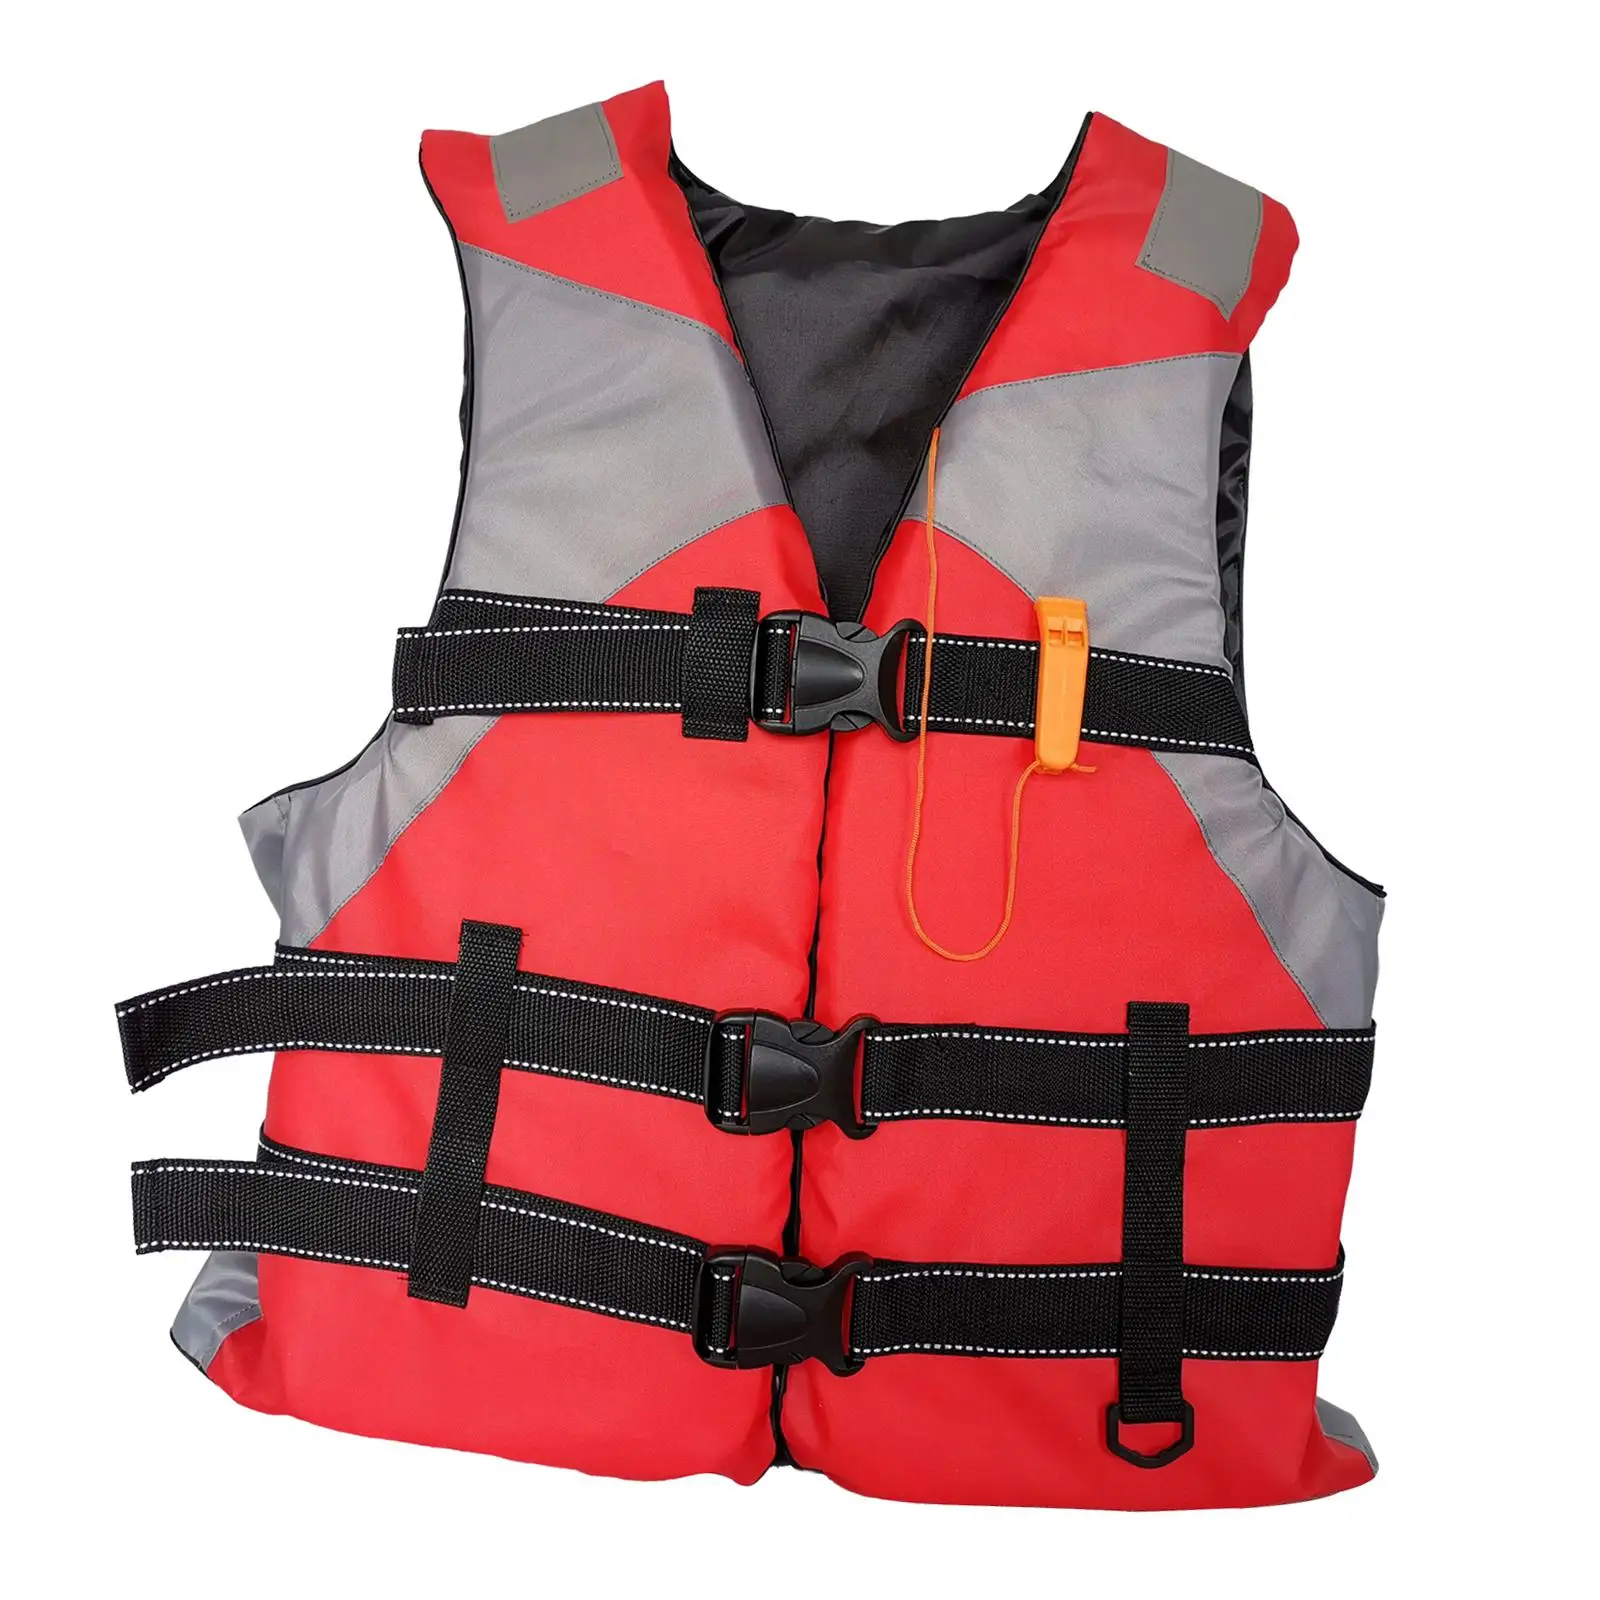 Youth Life Jacket Water Sports Vest Adjustable Strap Floating Vest with Whistle for Surfing Fishing Kayak Ski Child